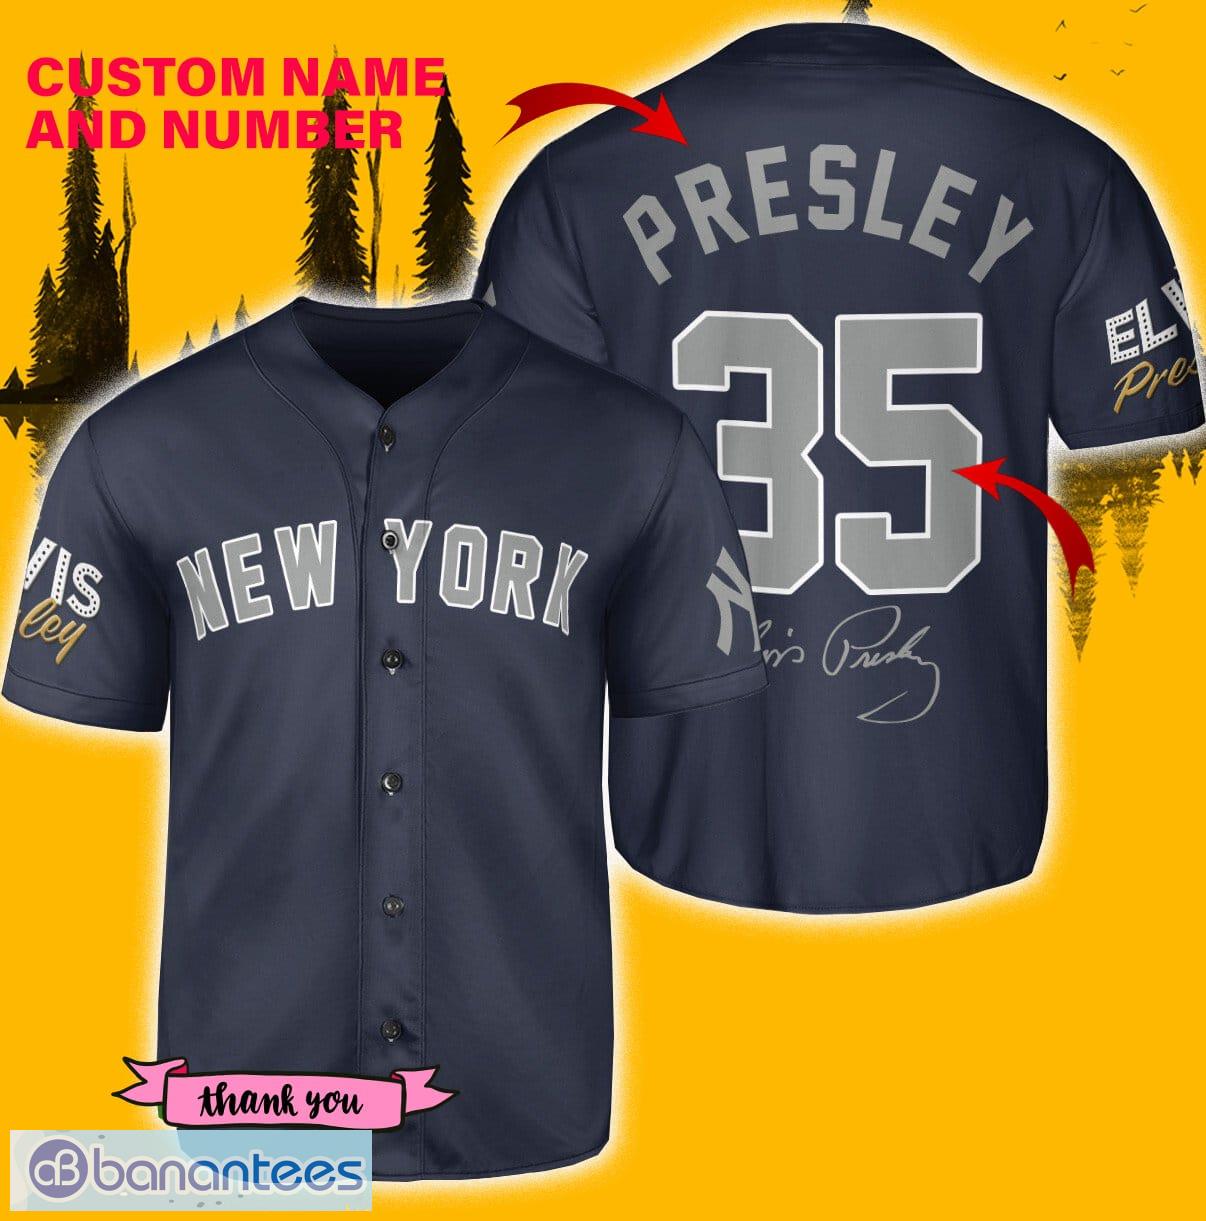 New York Yankees Elvis Presley Baseball Jersey 